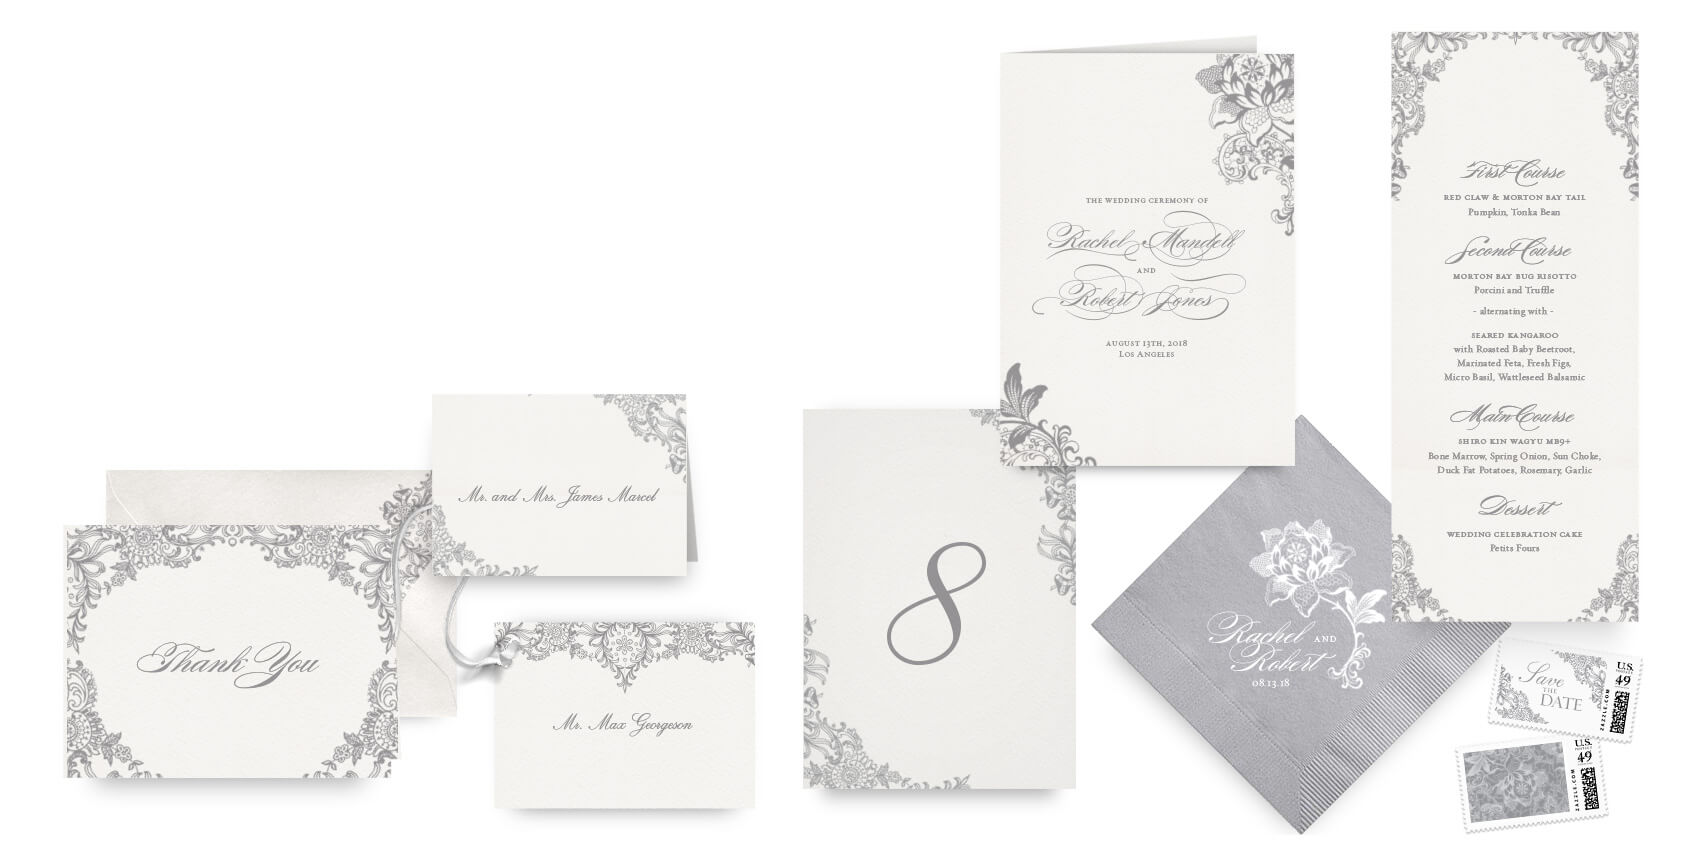 Grey lace menus, programs and wedding accessories